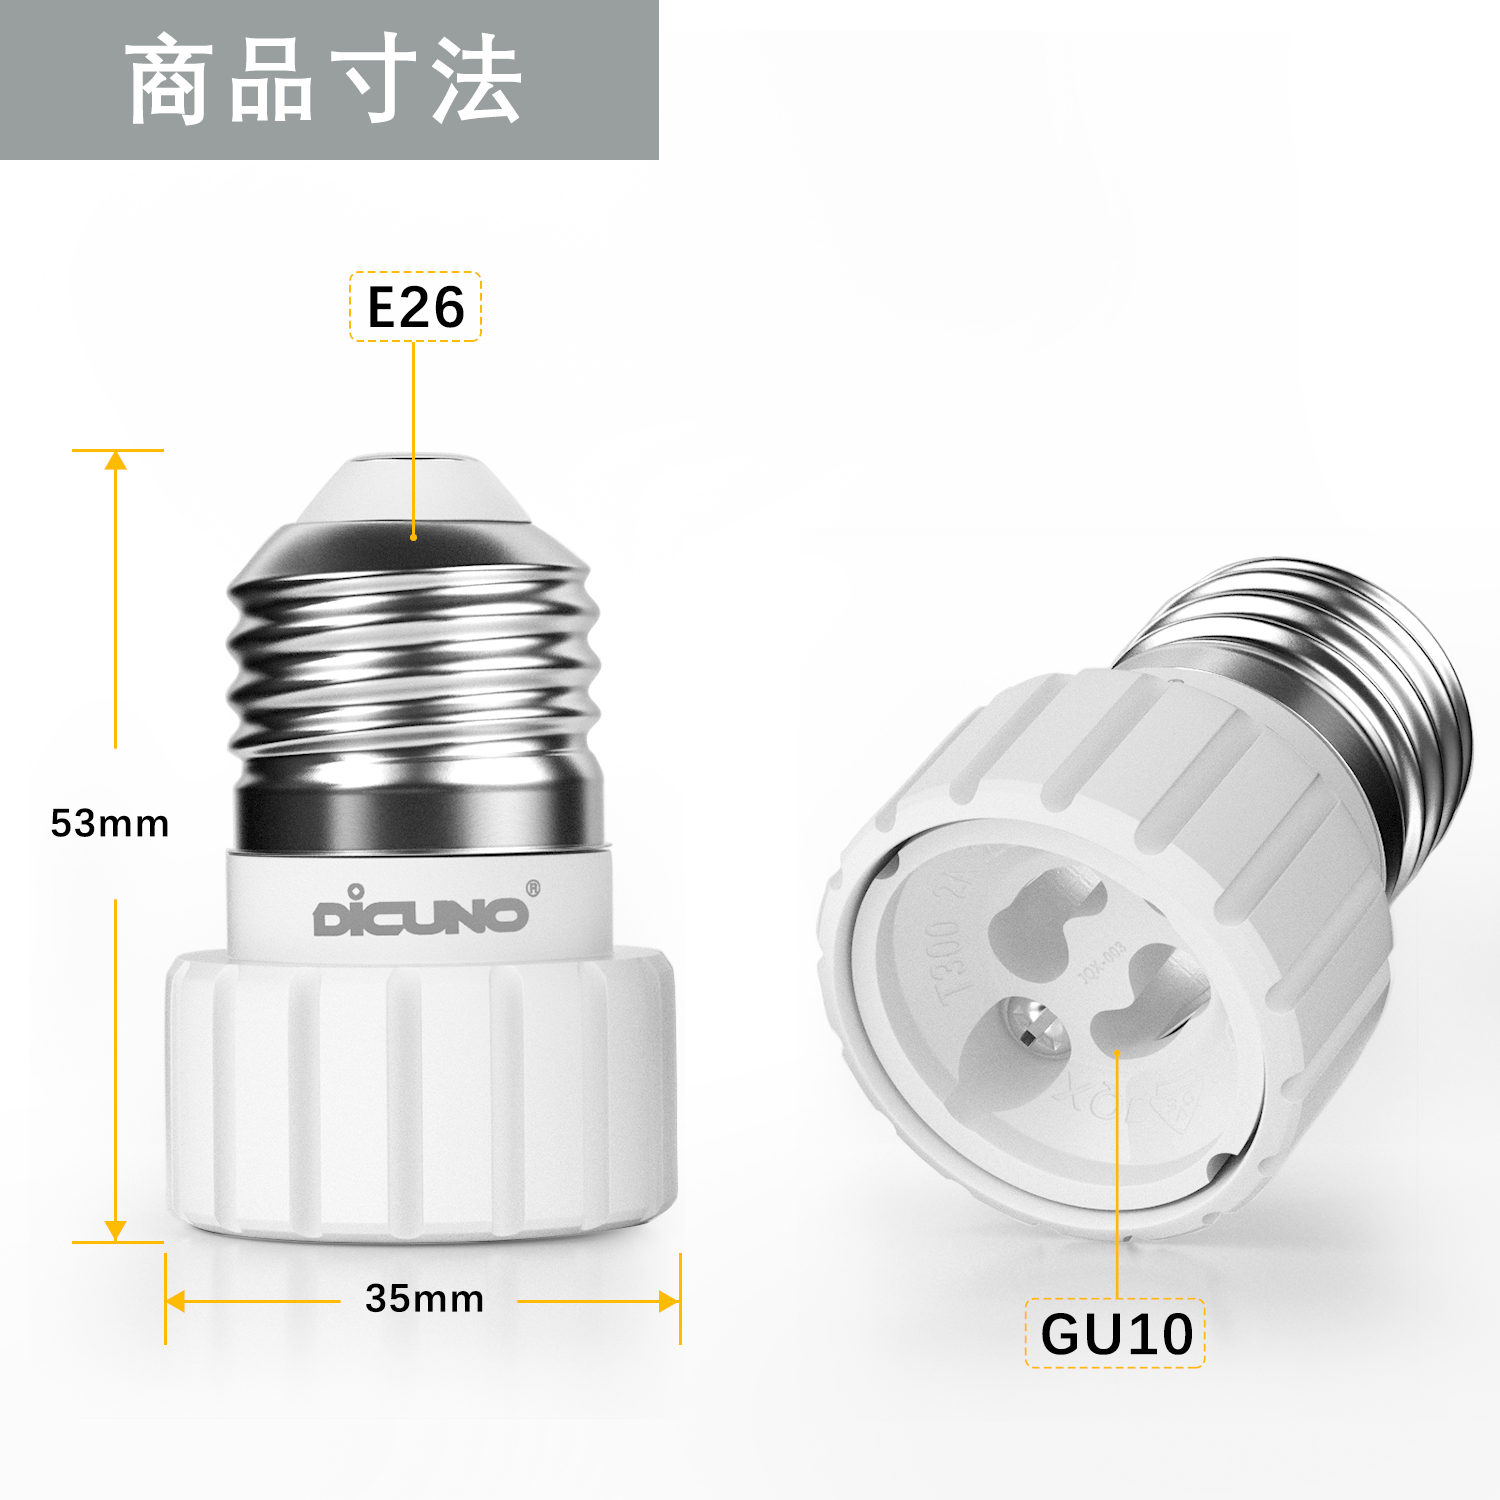 DiCUNO E26→GU10 口金変換アダプター 160度耐熱 電球ソケット 最大仕事率200W 6個セット 照明器具部品 